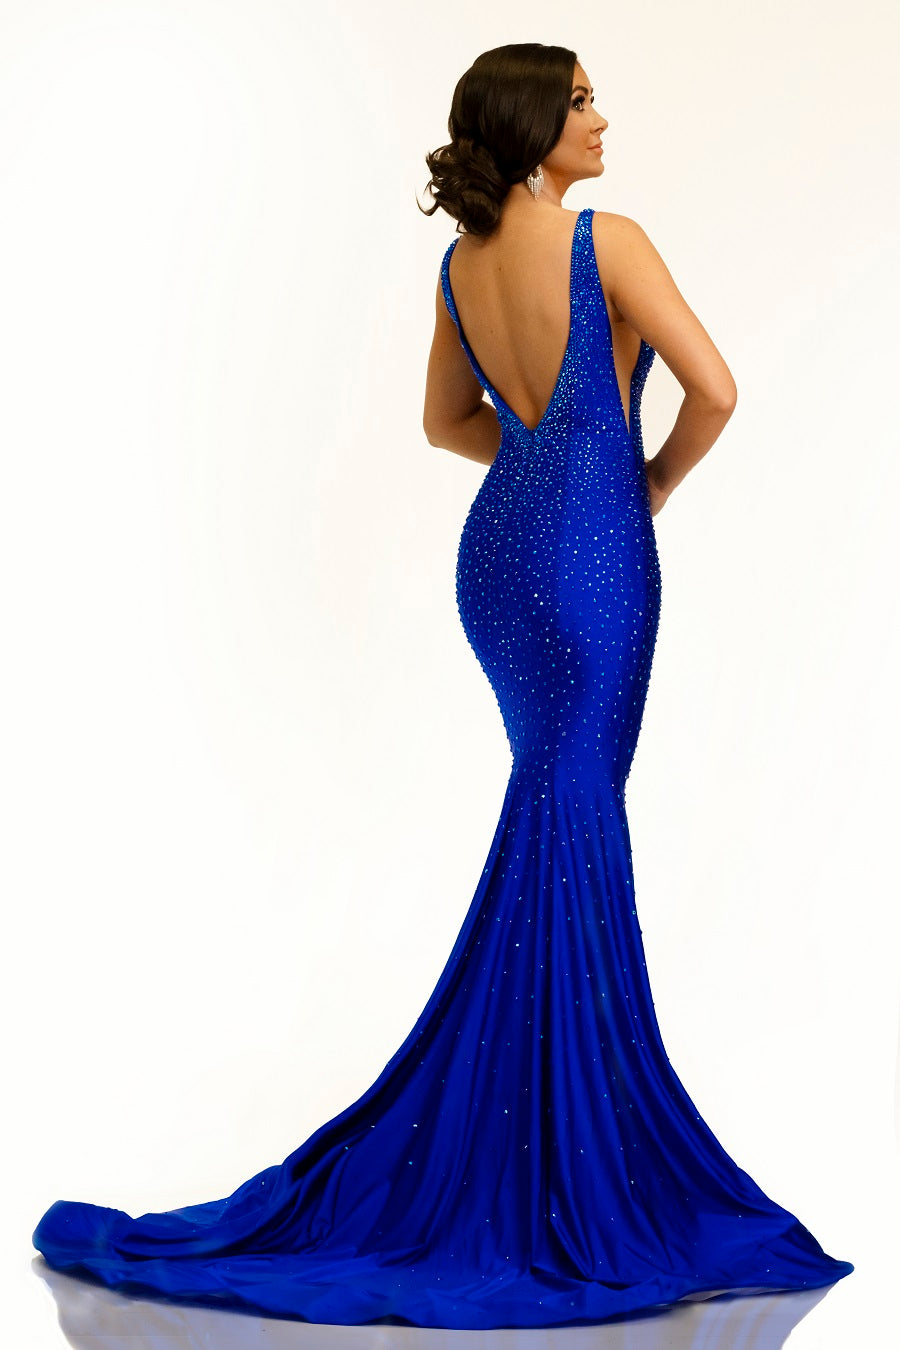 Johnathan-Kayne-2305-royal-prom-dress-back-v-neckline-backless-mermaid-train-embellished